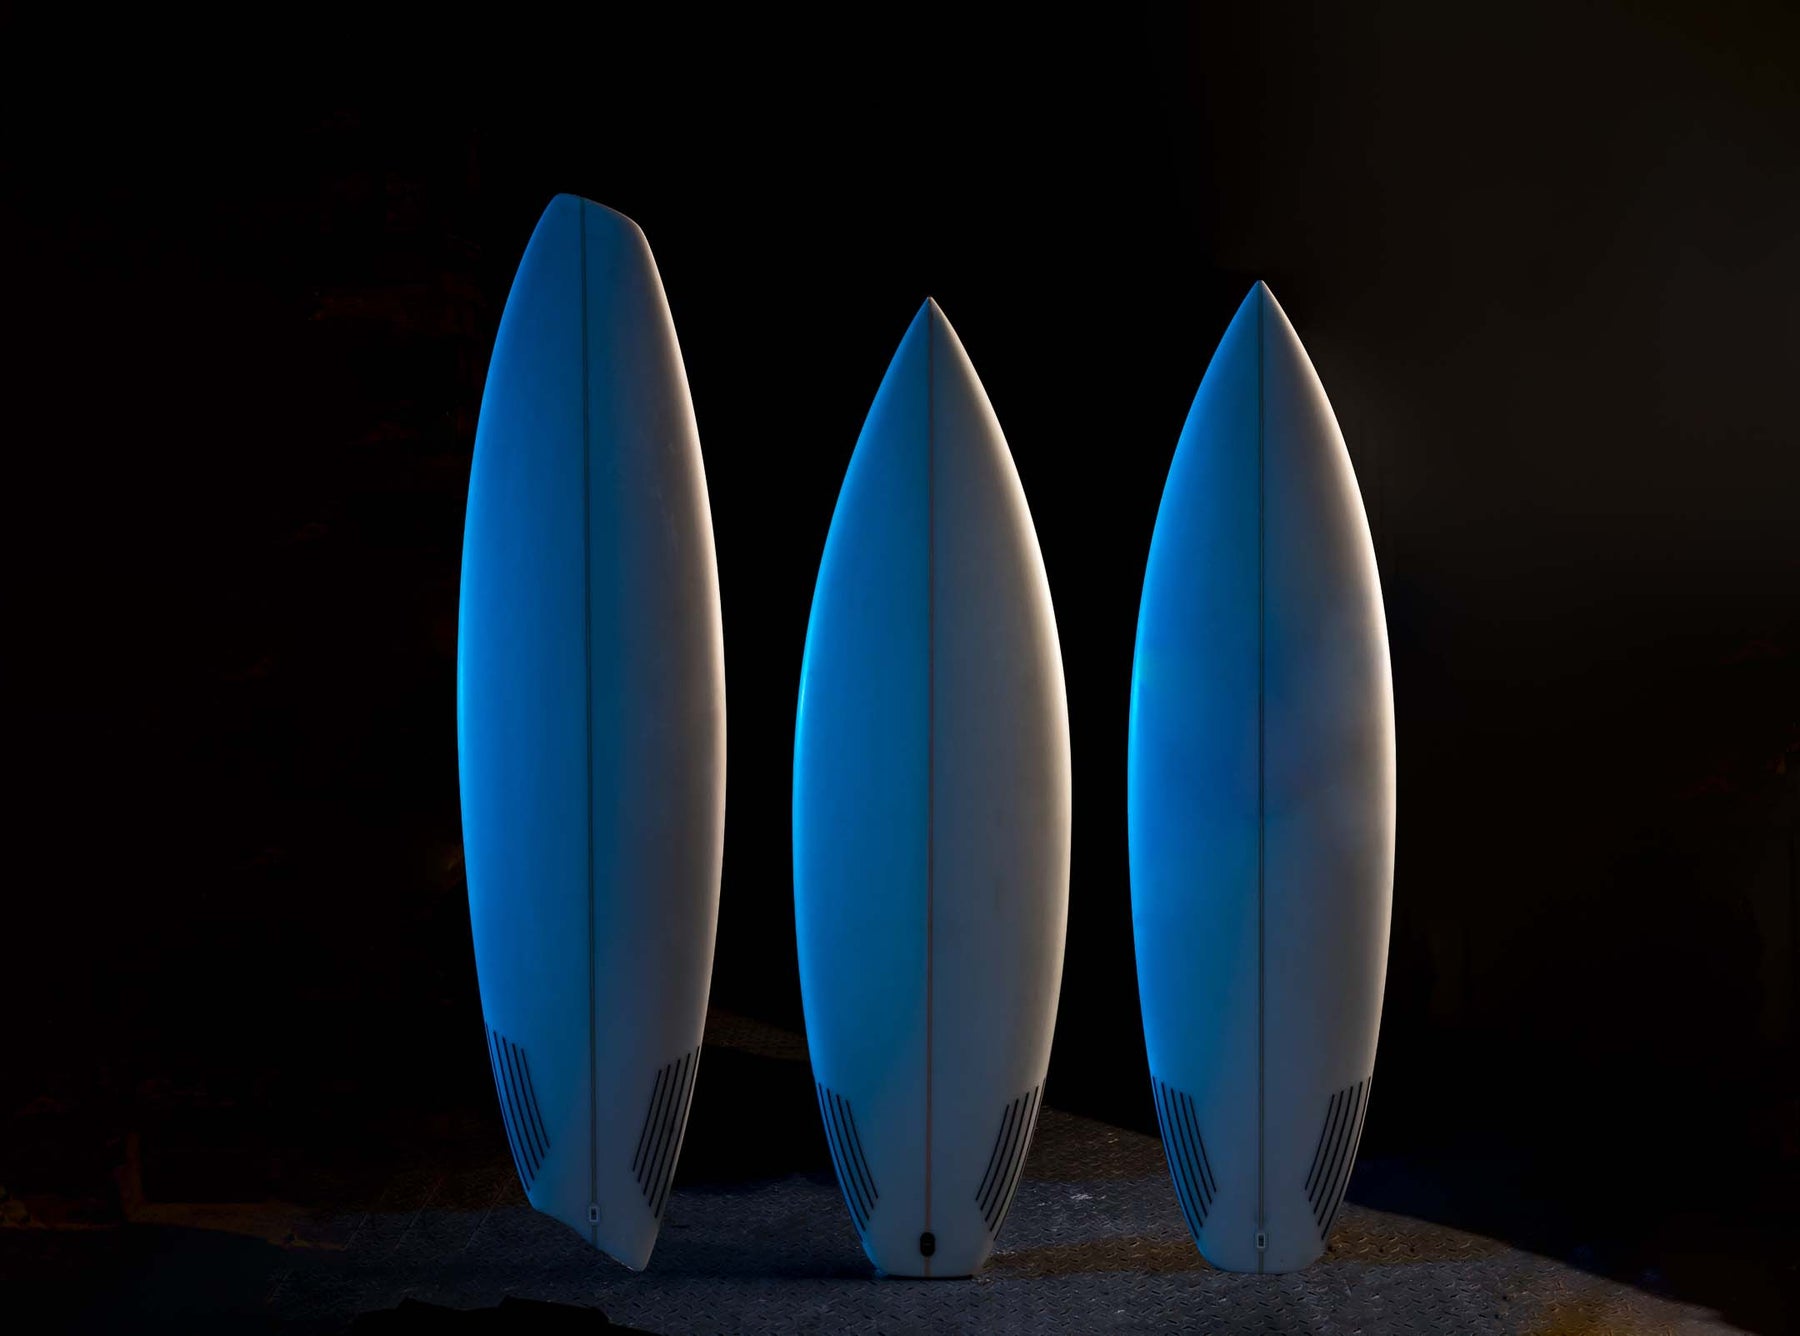 Three logo-less surfboards in blue light. 